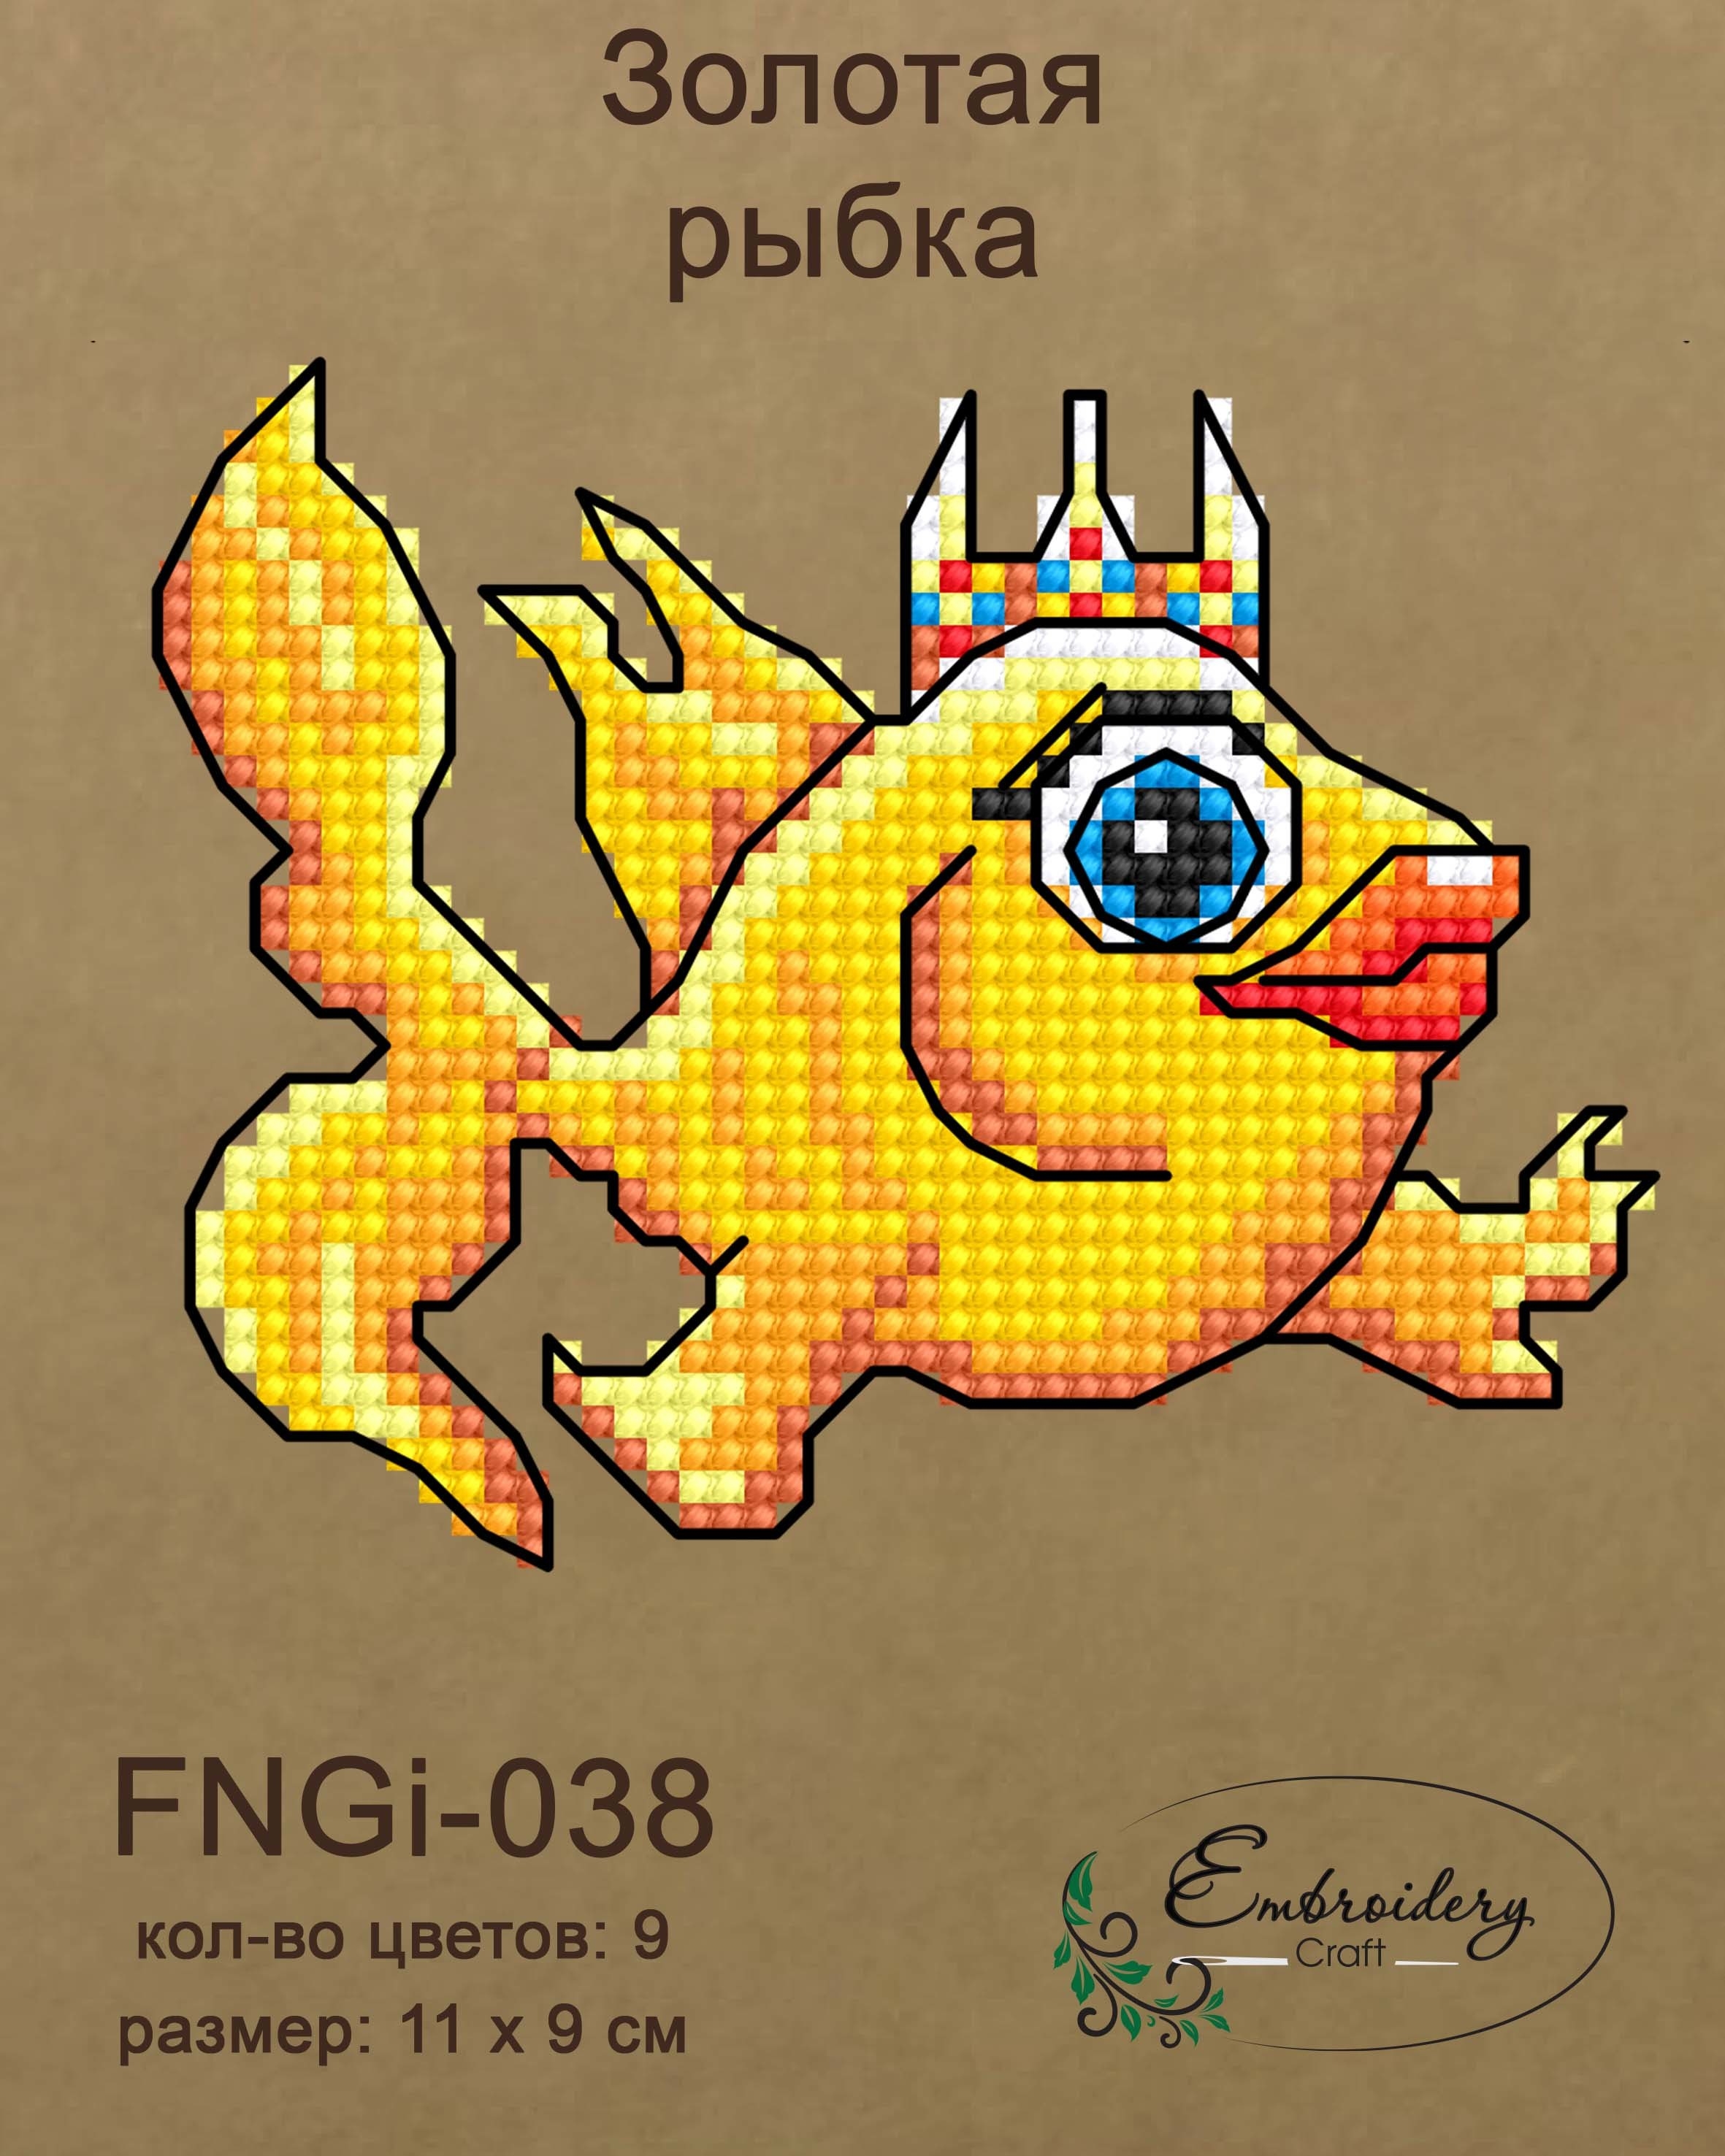 FNNGi-038 Золотая рыбка